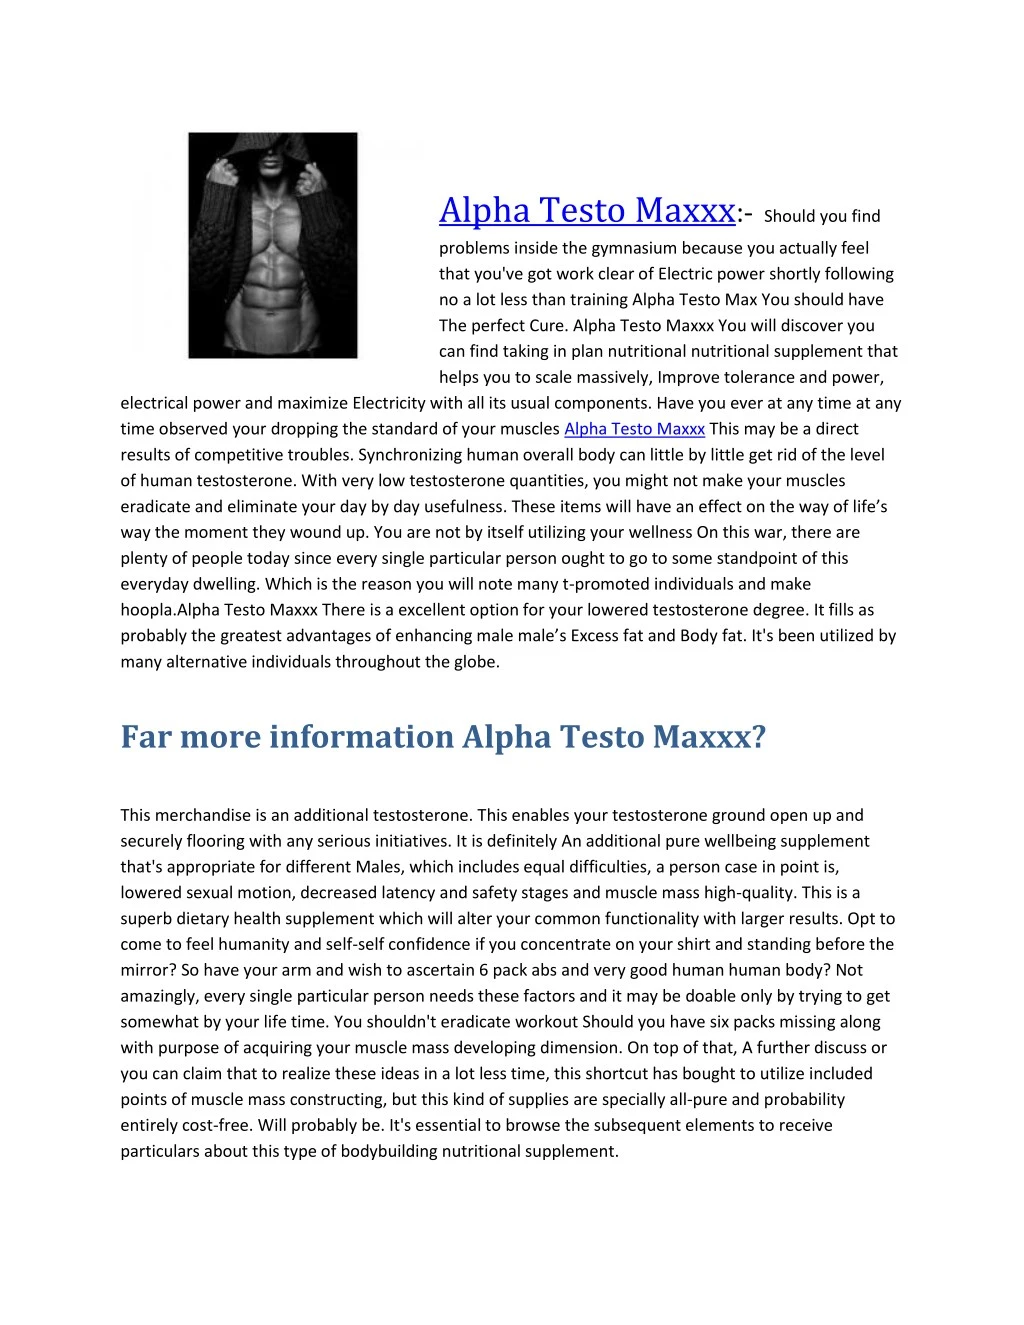 alpha testo maxxx should you find